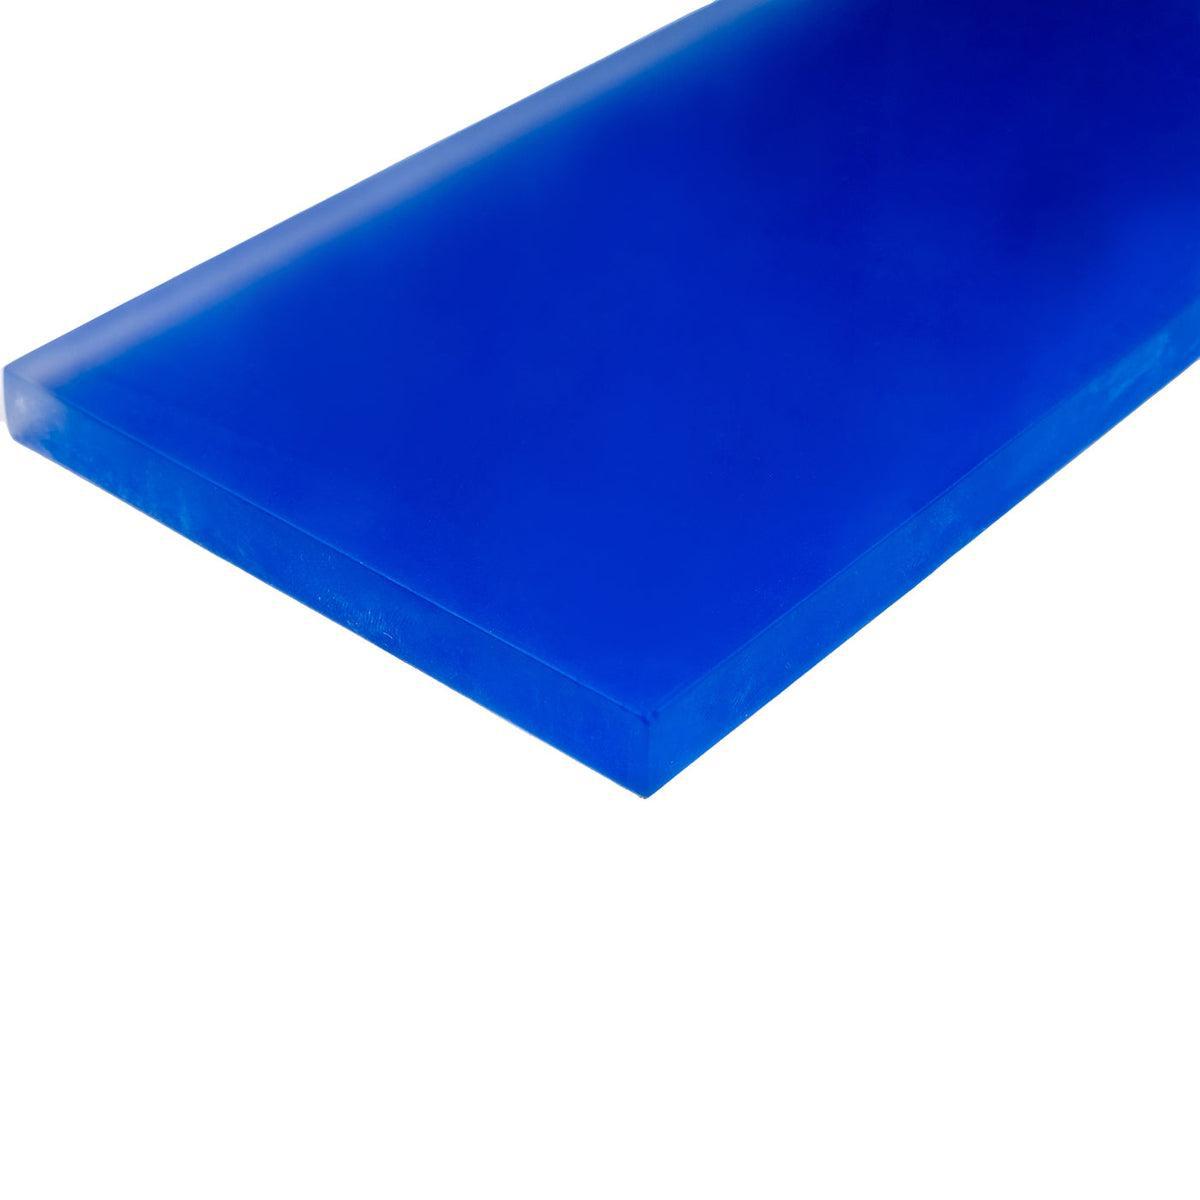 Glacier Cobalt Blue 3X6 Frosted Glass Subway Tile